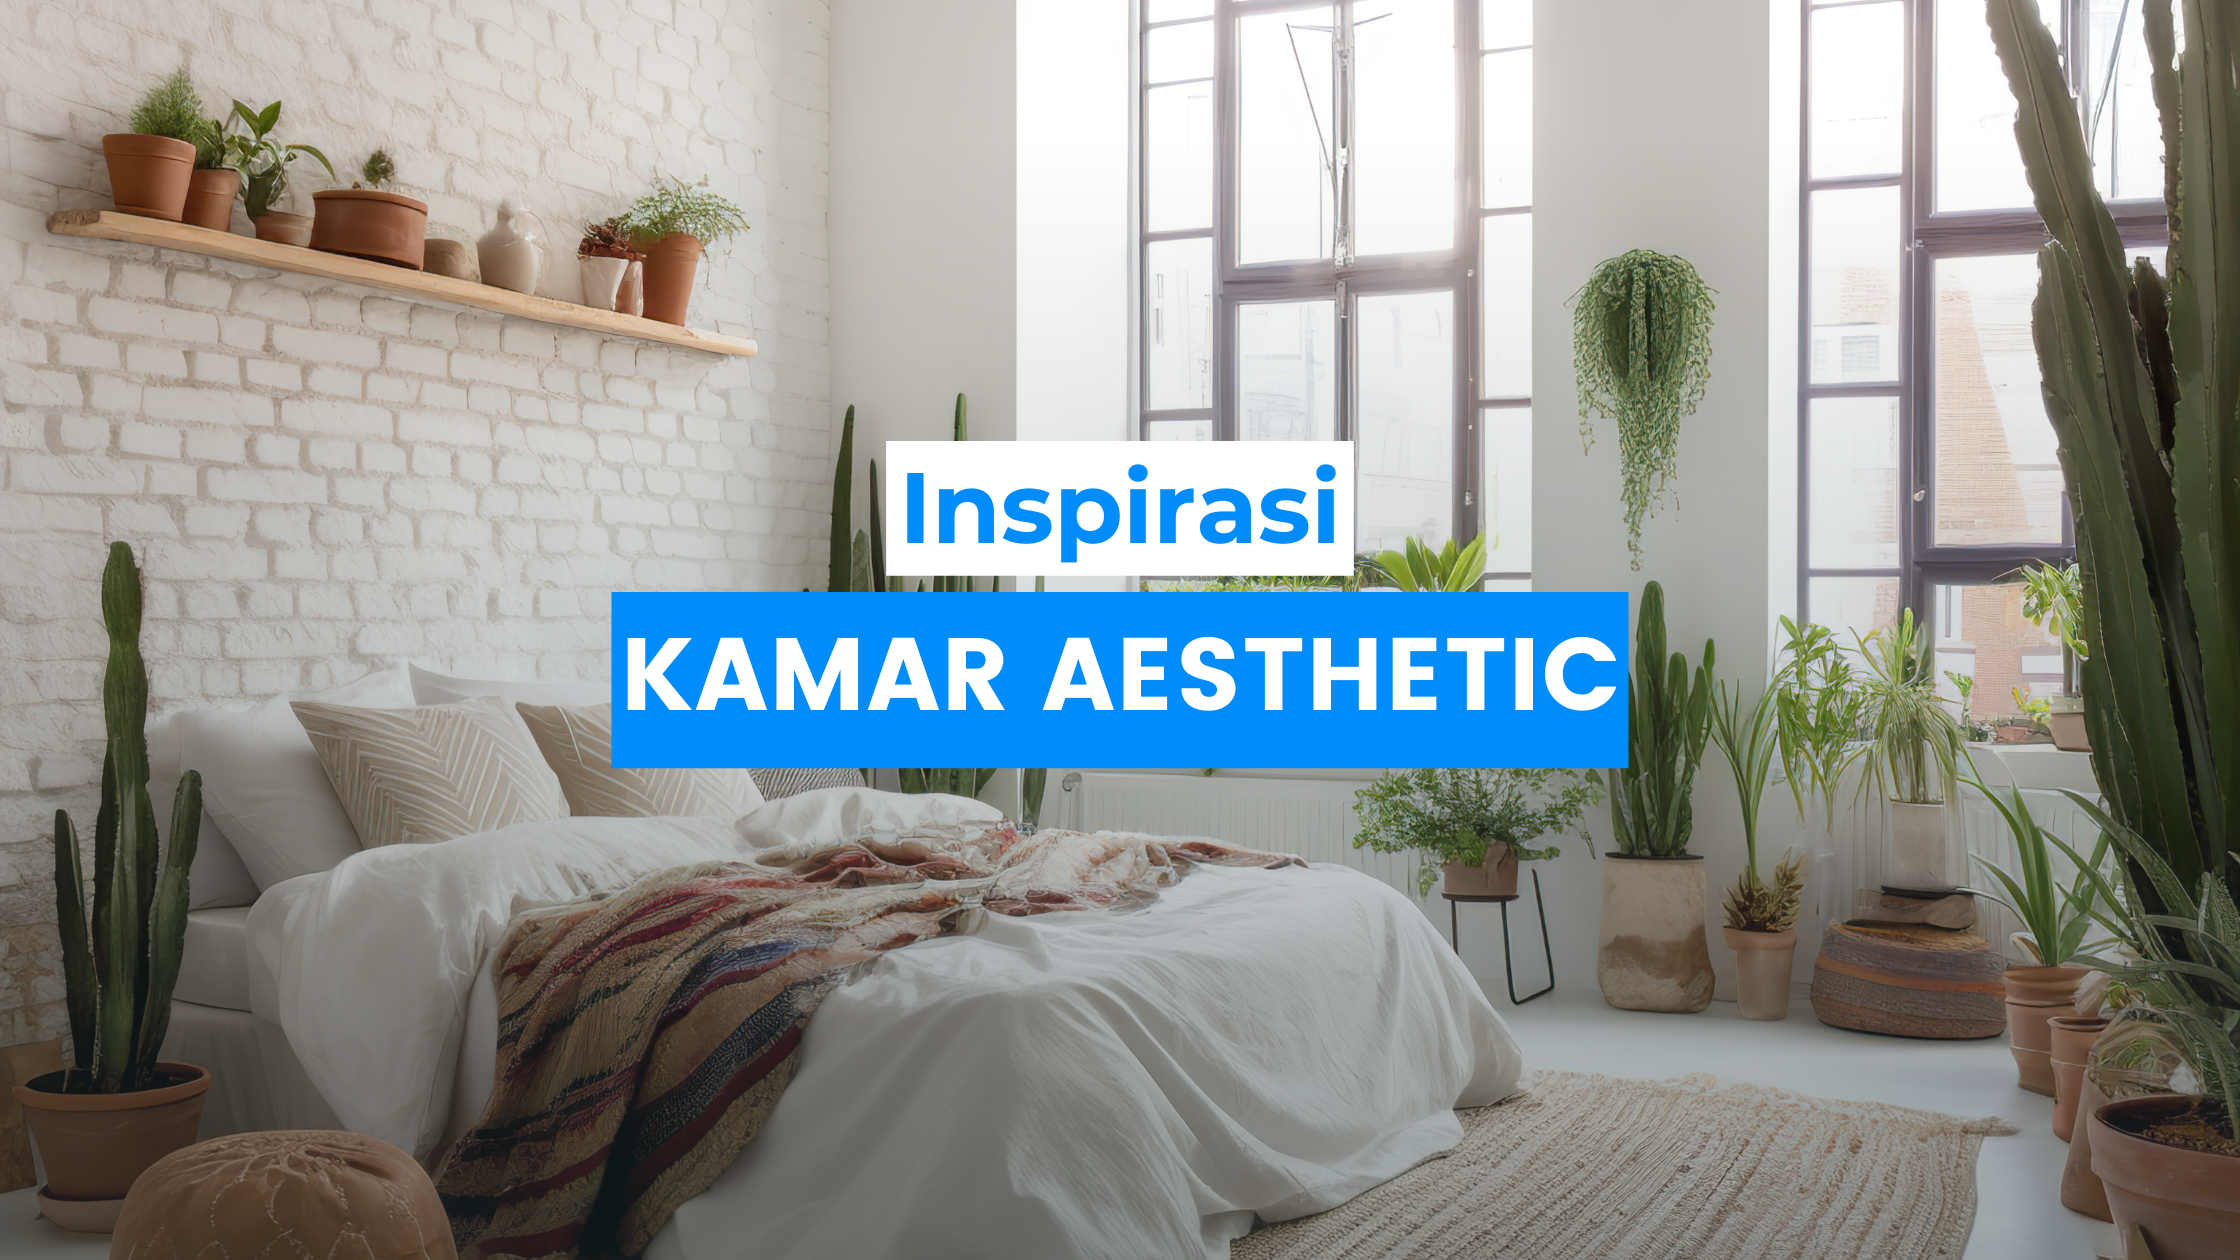 Inspirasi Kamar Aesthetic